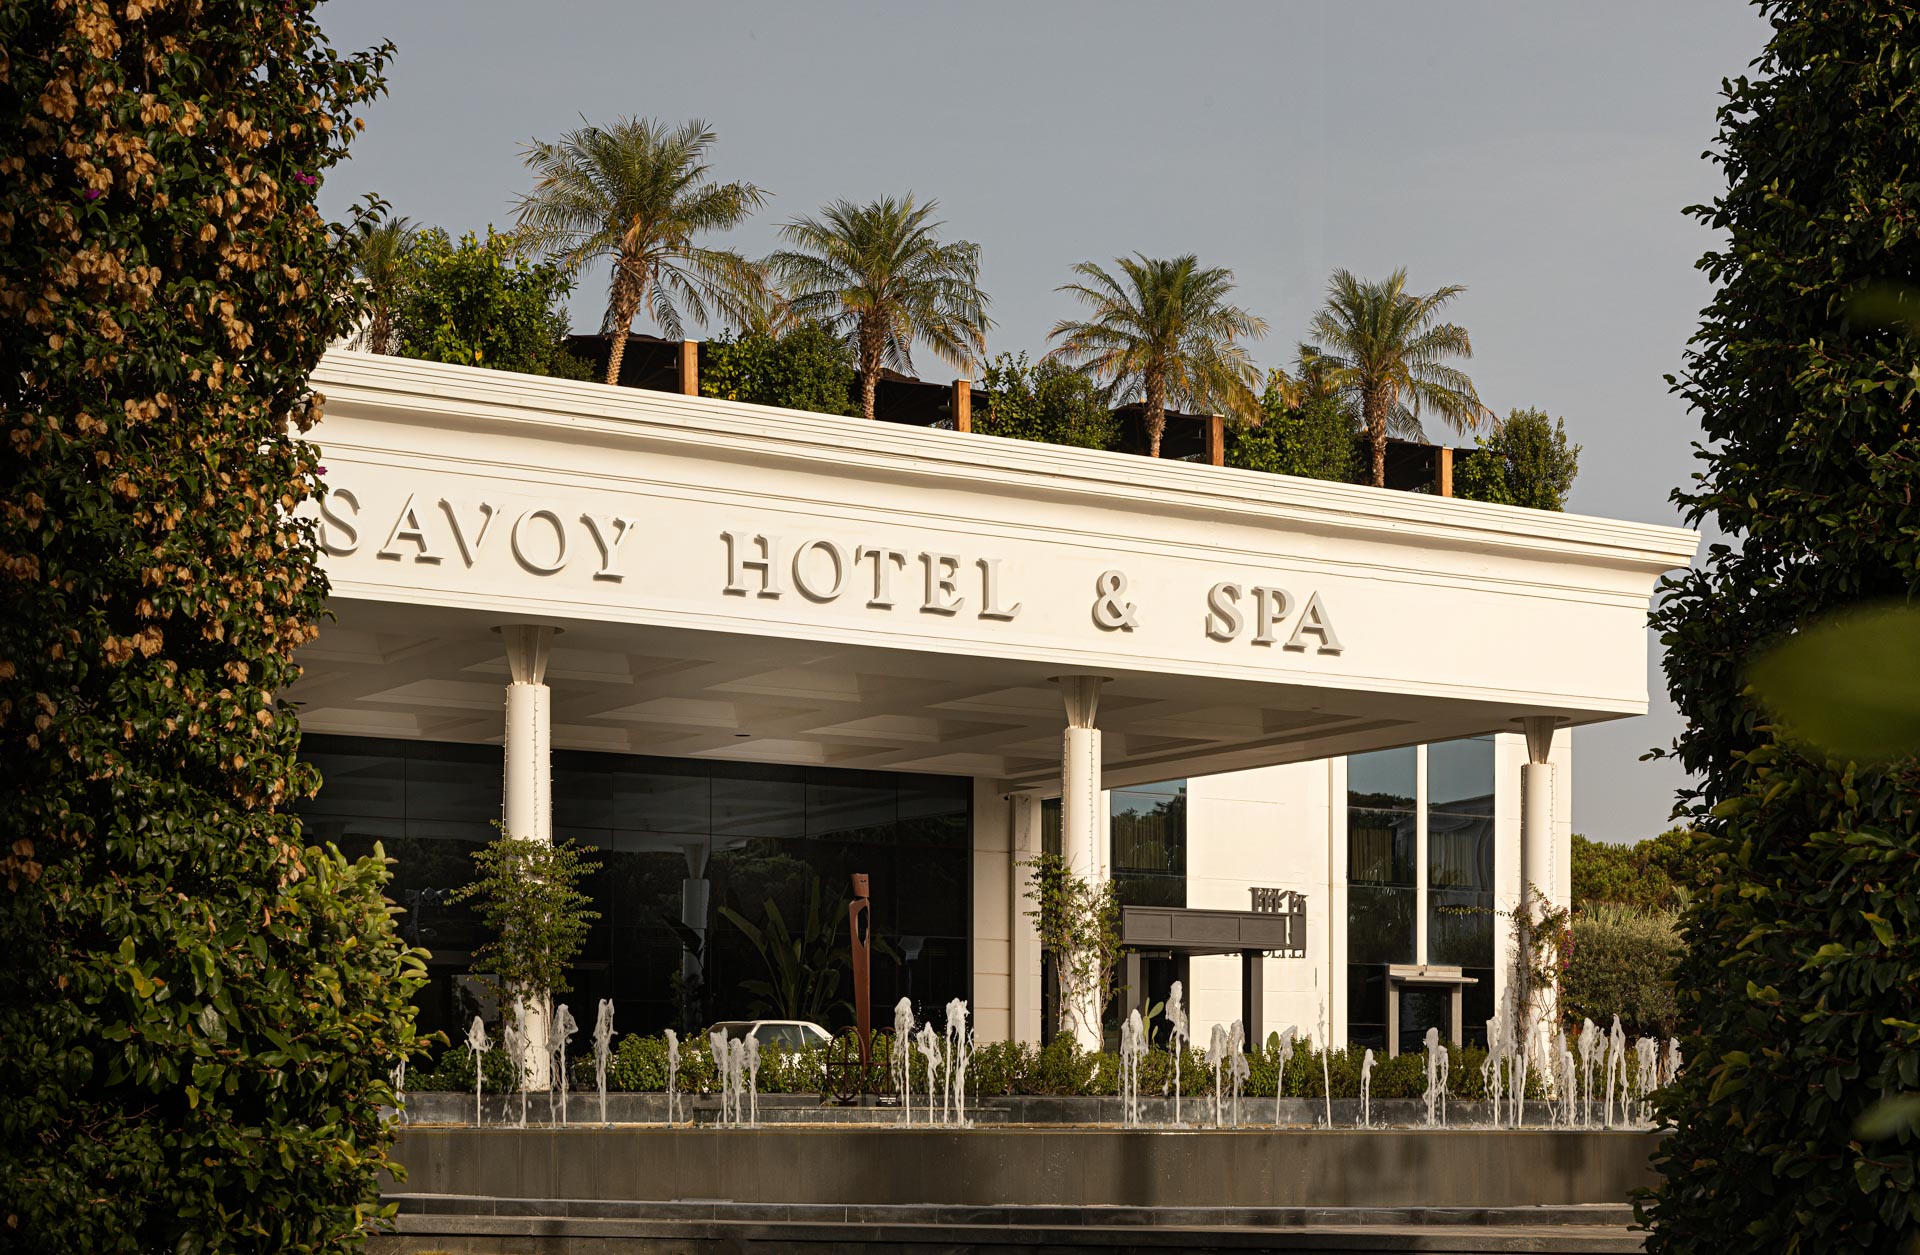 Savoy Hotel & Spa Entrance